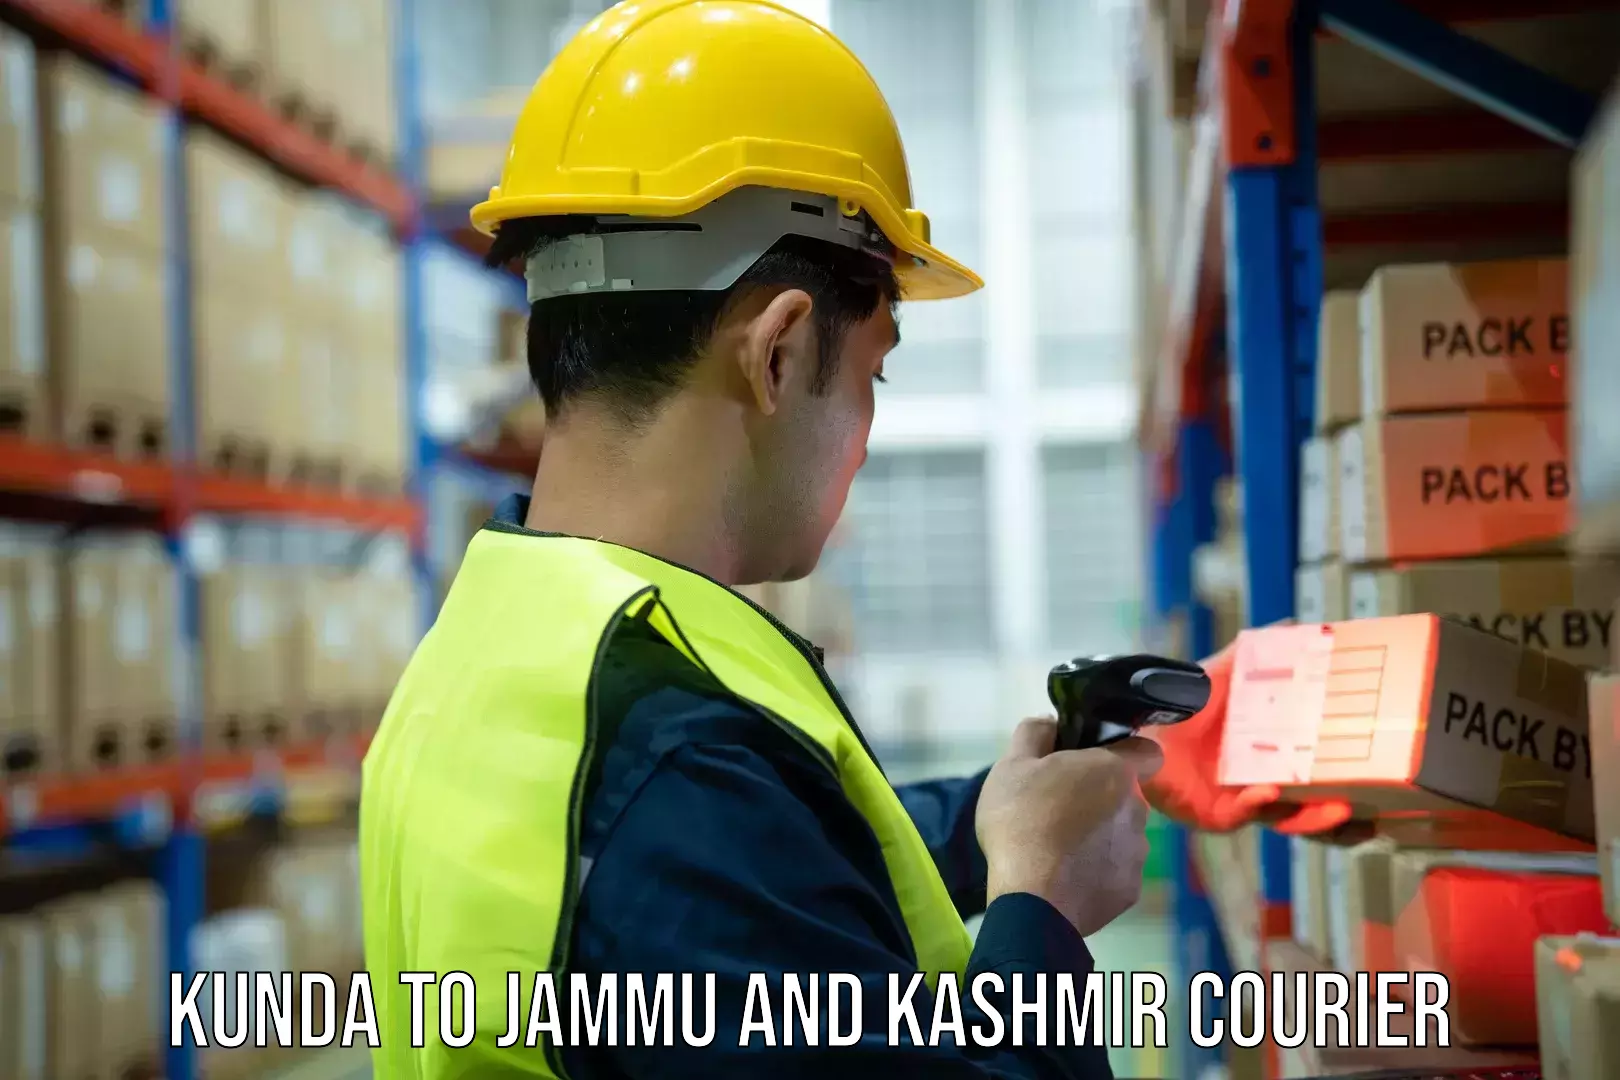 Courier service booking Kunda to Jammu and Kashmir